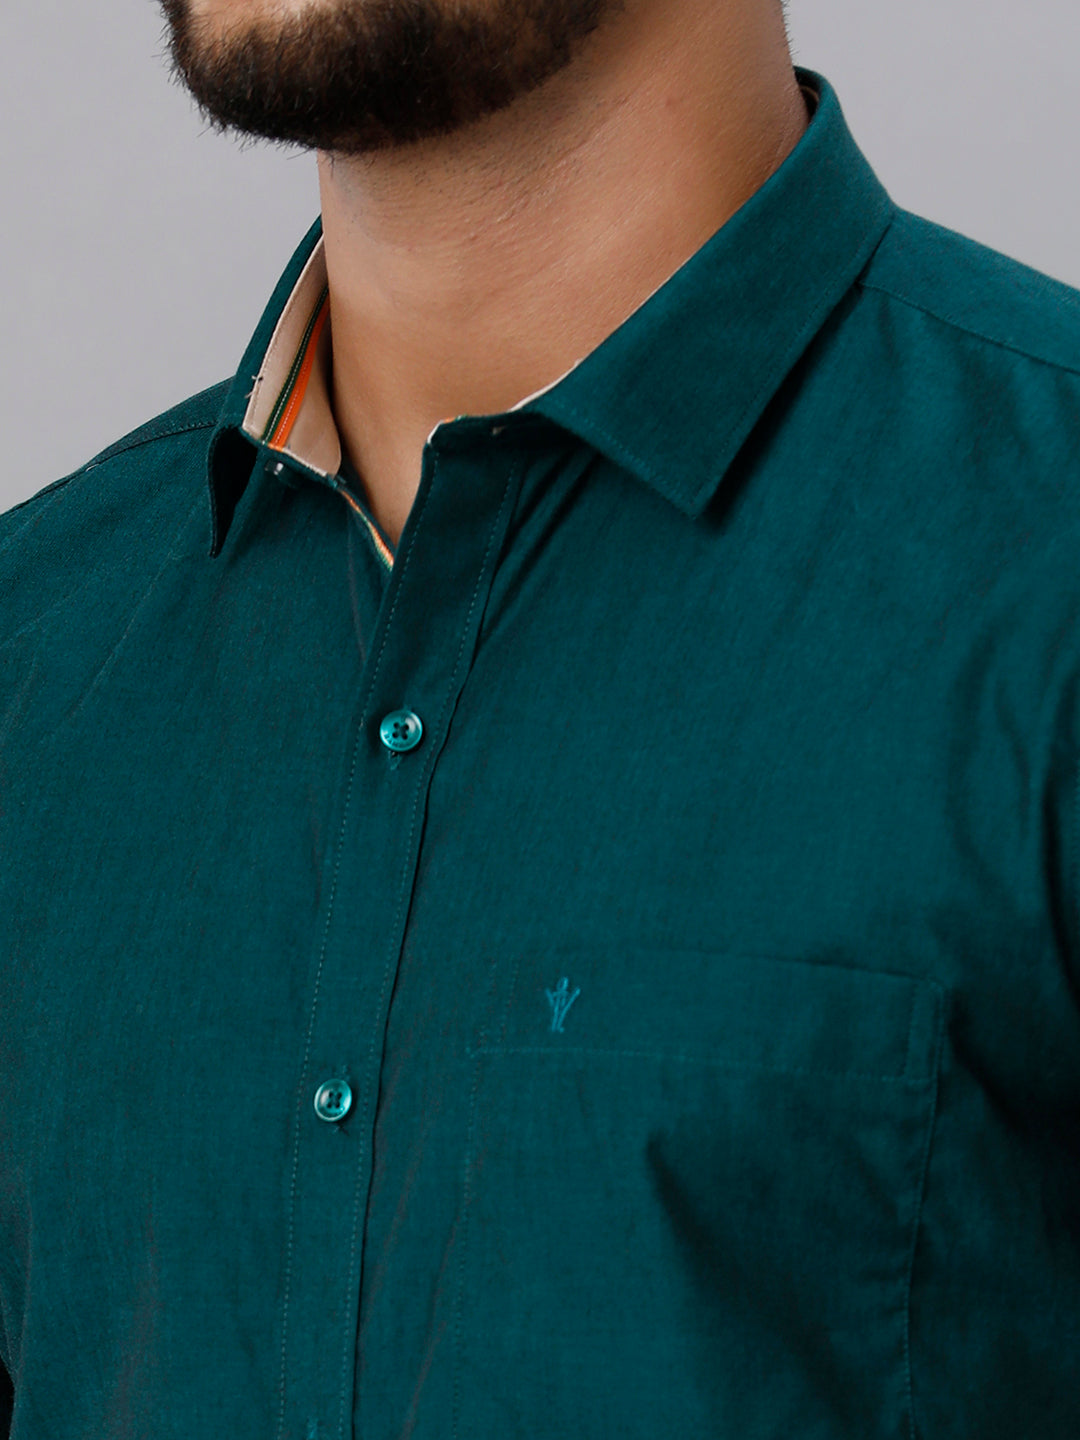 Mens Premium Cotton Formal Shirt Half Sleeves Dark Green MH G116-Zoom view